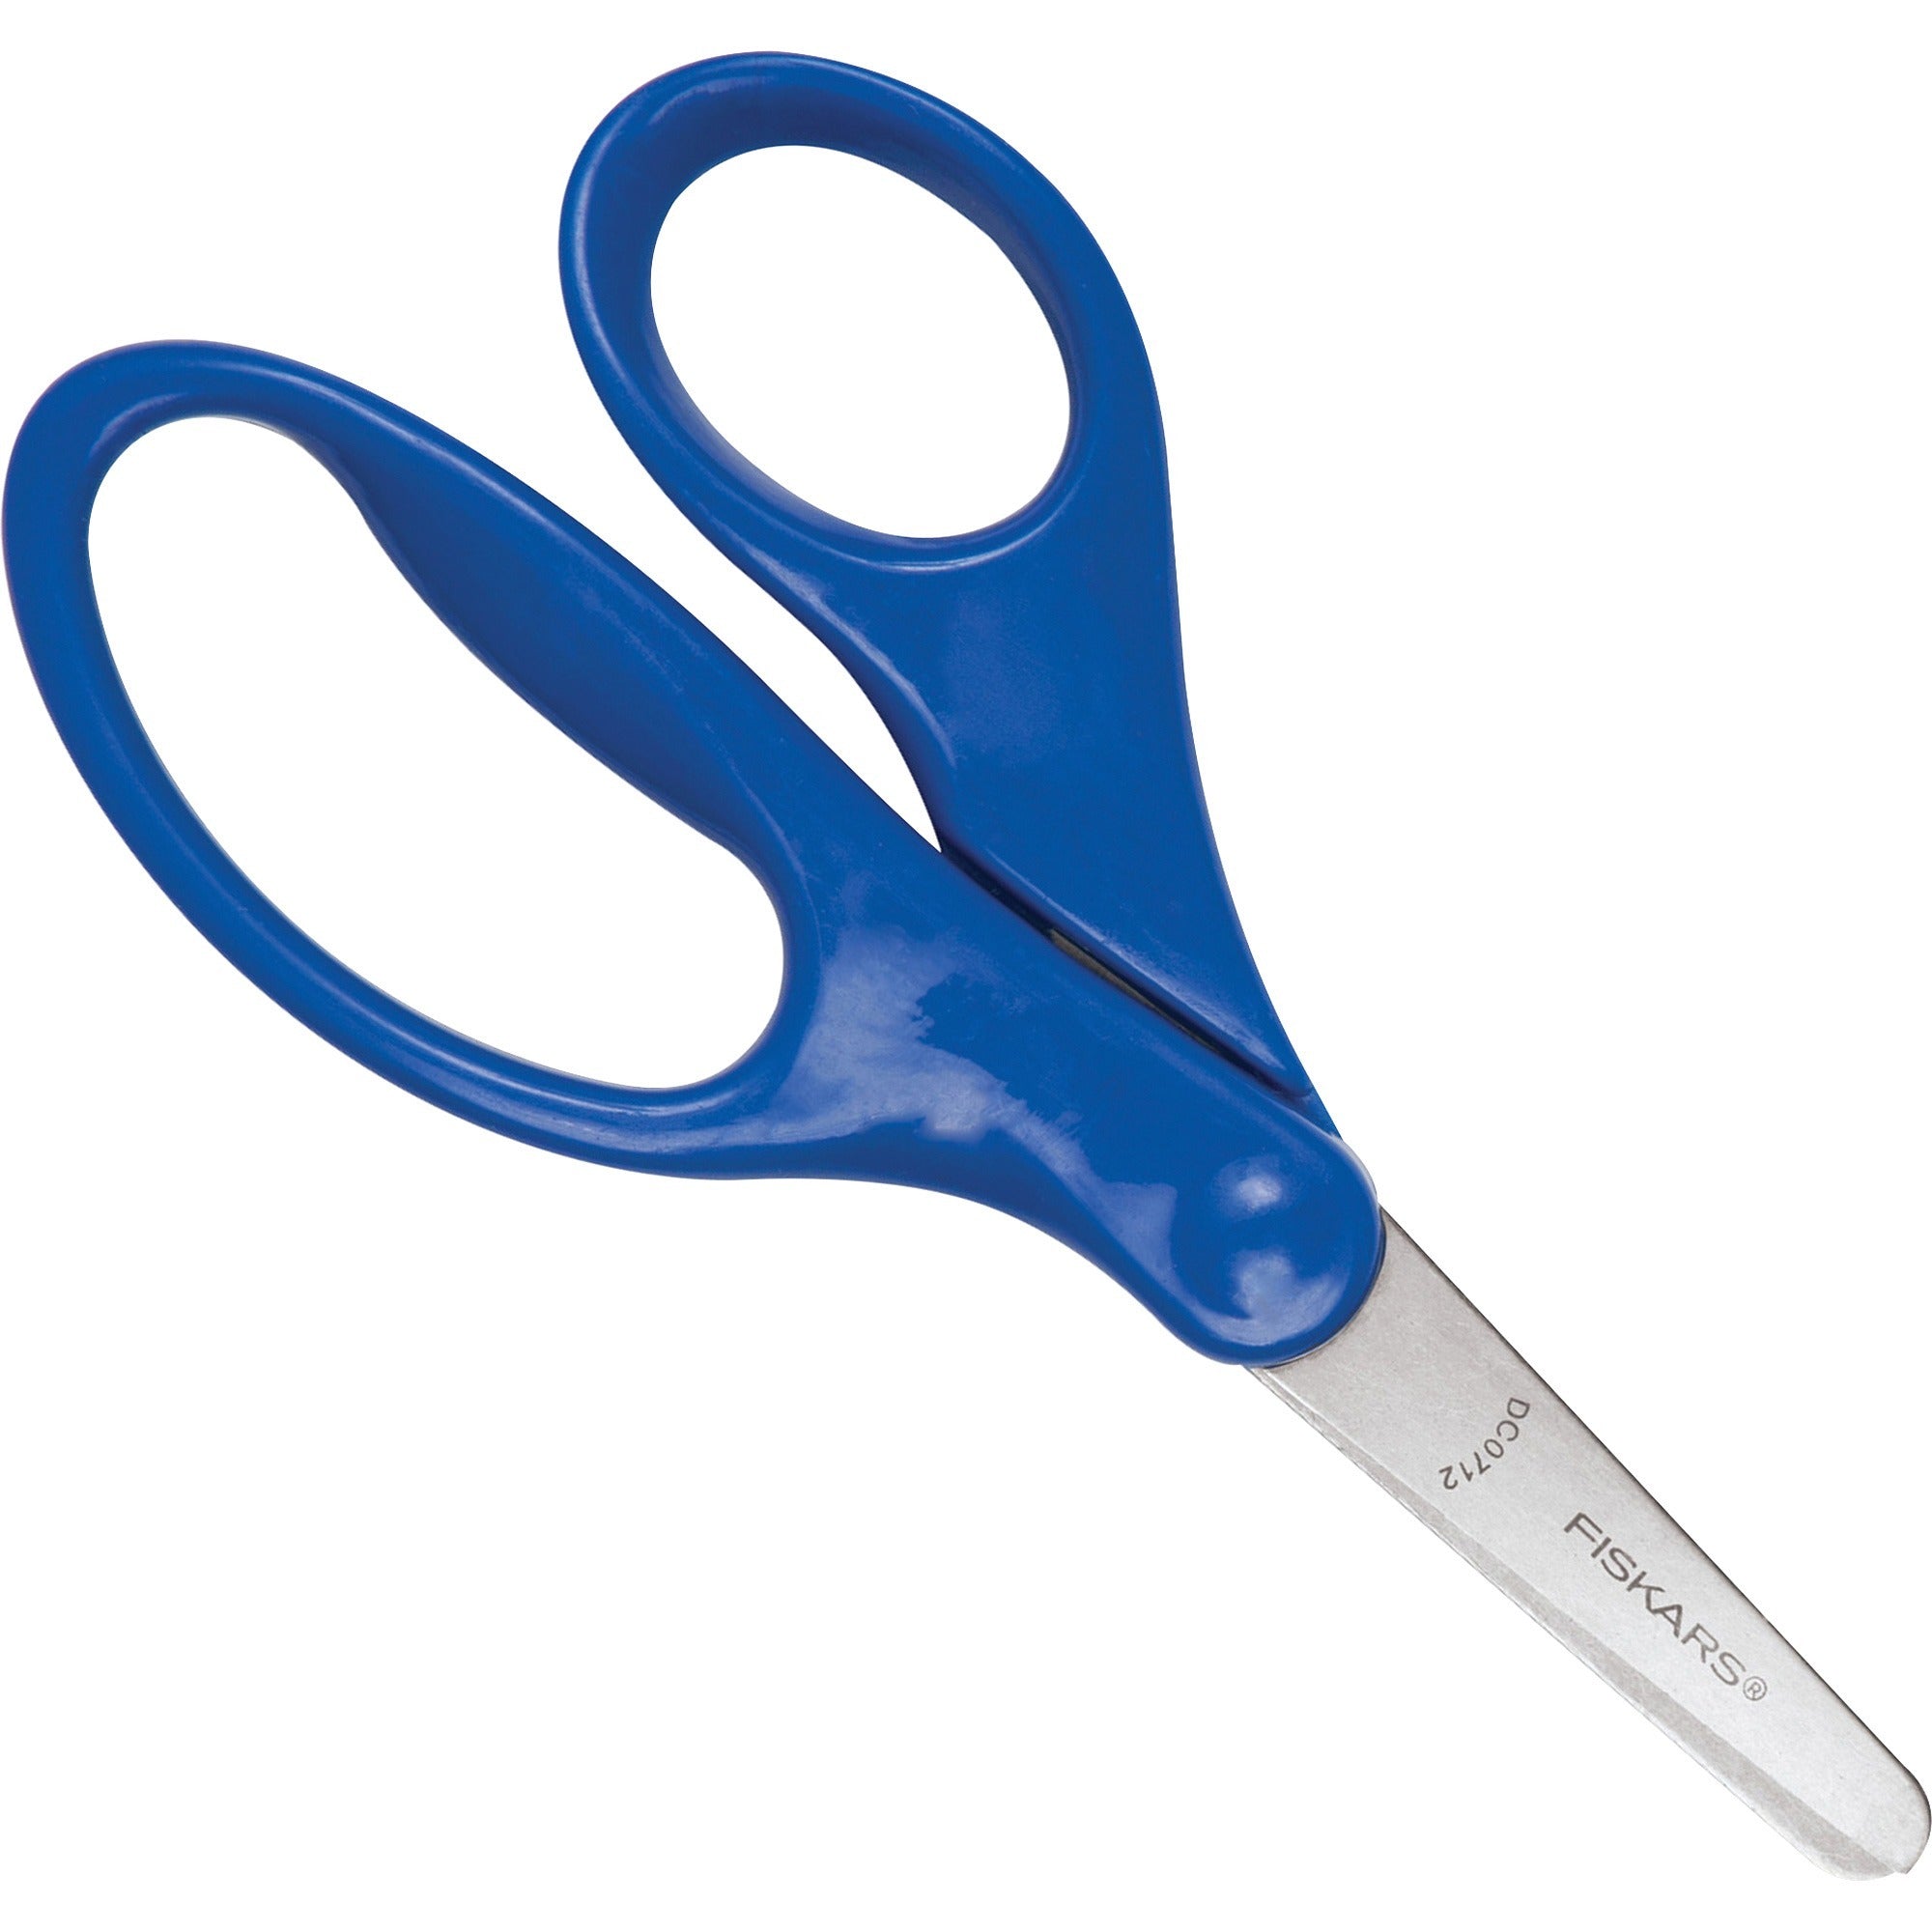 fiskars-5-blunt-tip-kids-scissors-5-overall-lengthsafety-edge-blade-blunted-tip-blue-1-each_fsk1941601064 - 1